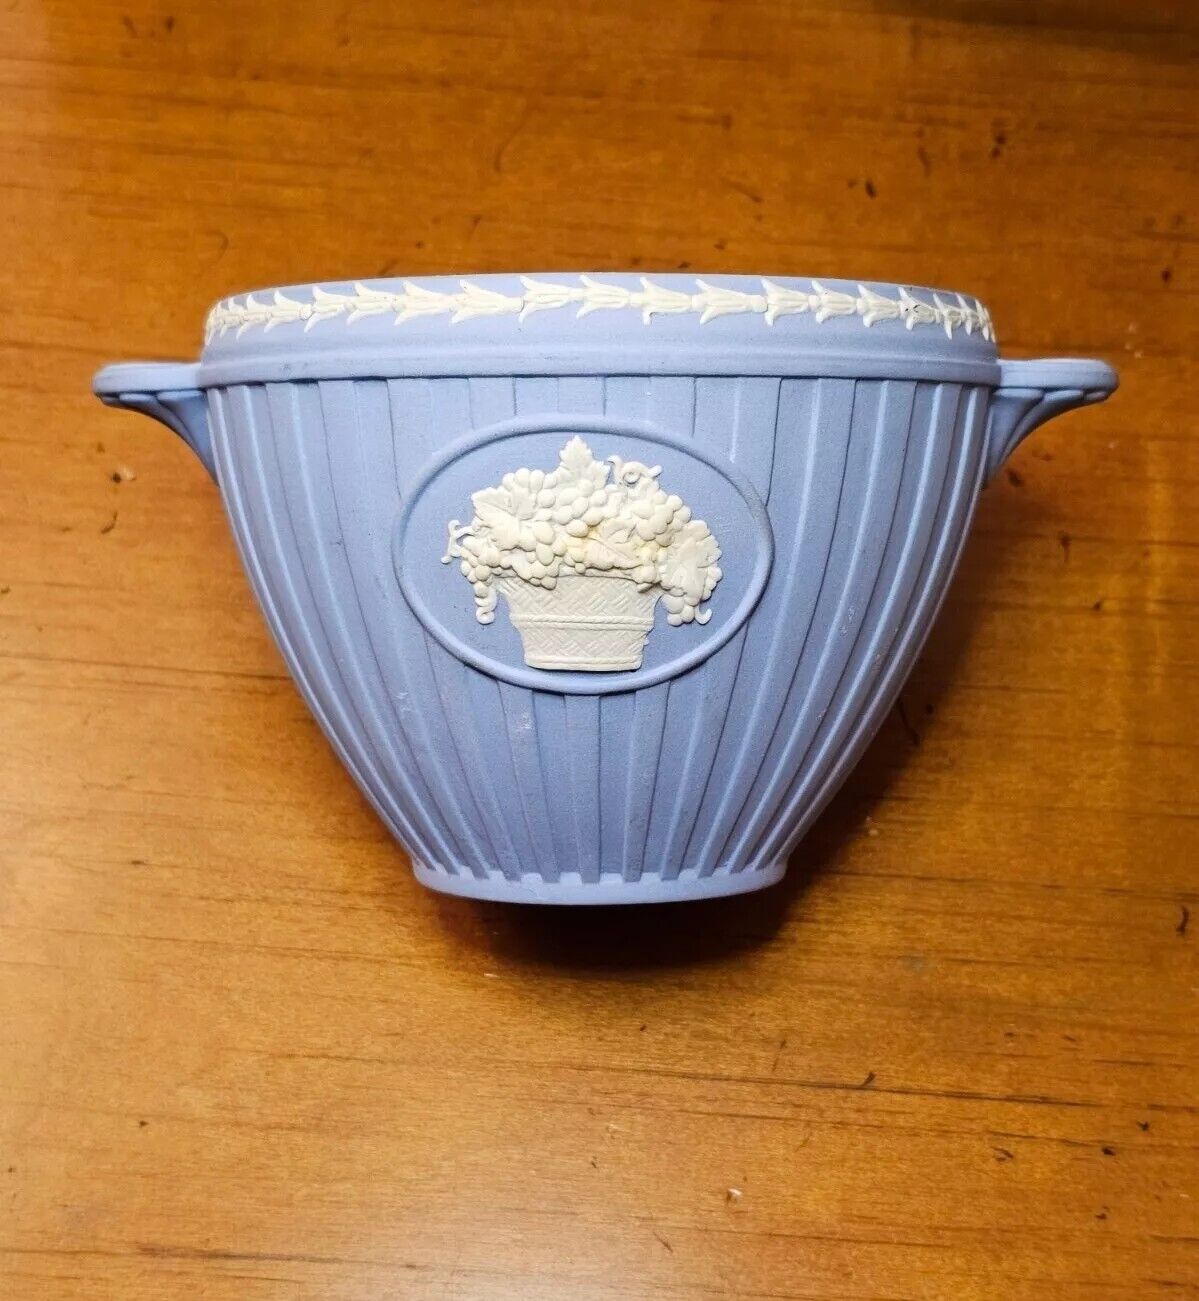 SIGNED Wedgwood Blue White Jasperware Cache Pot Planter Handles Made In England 